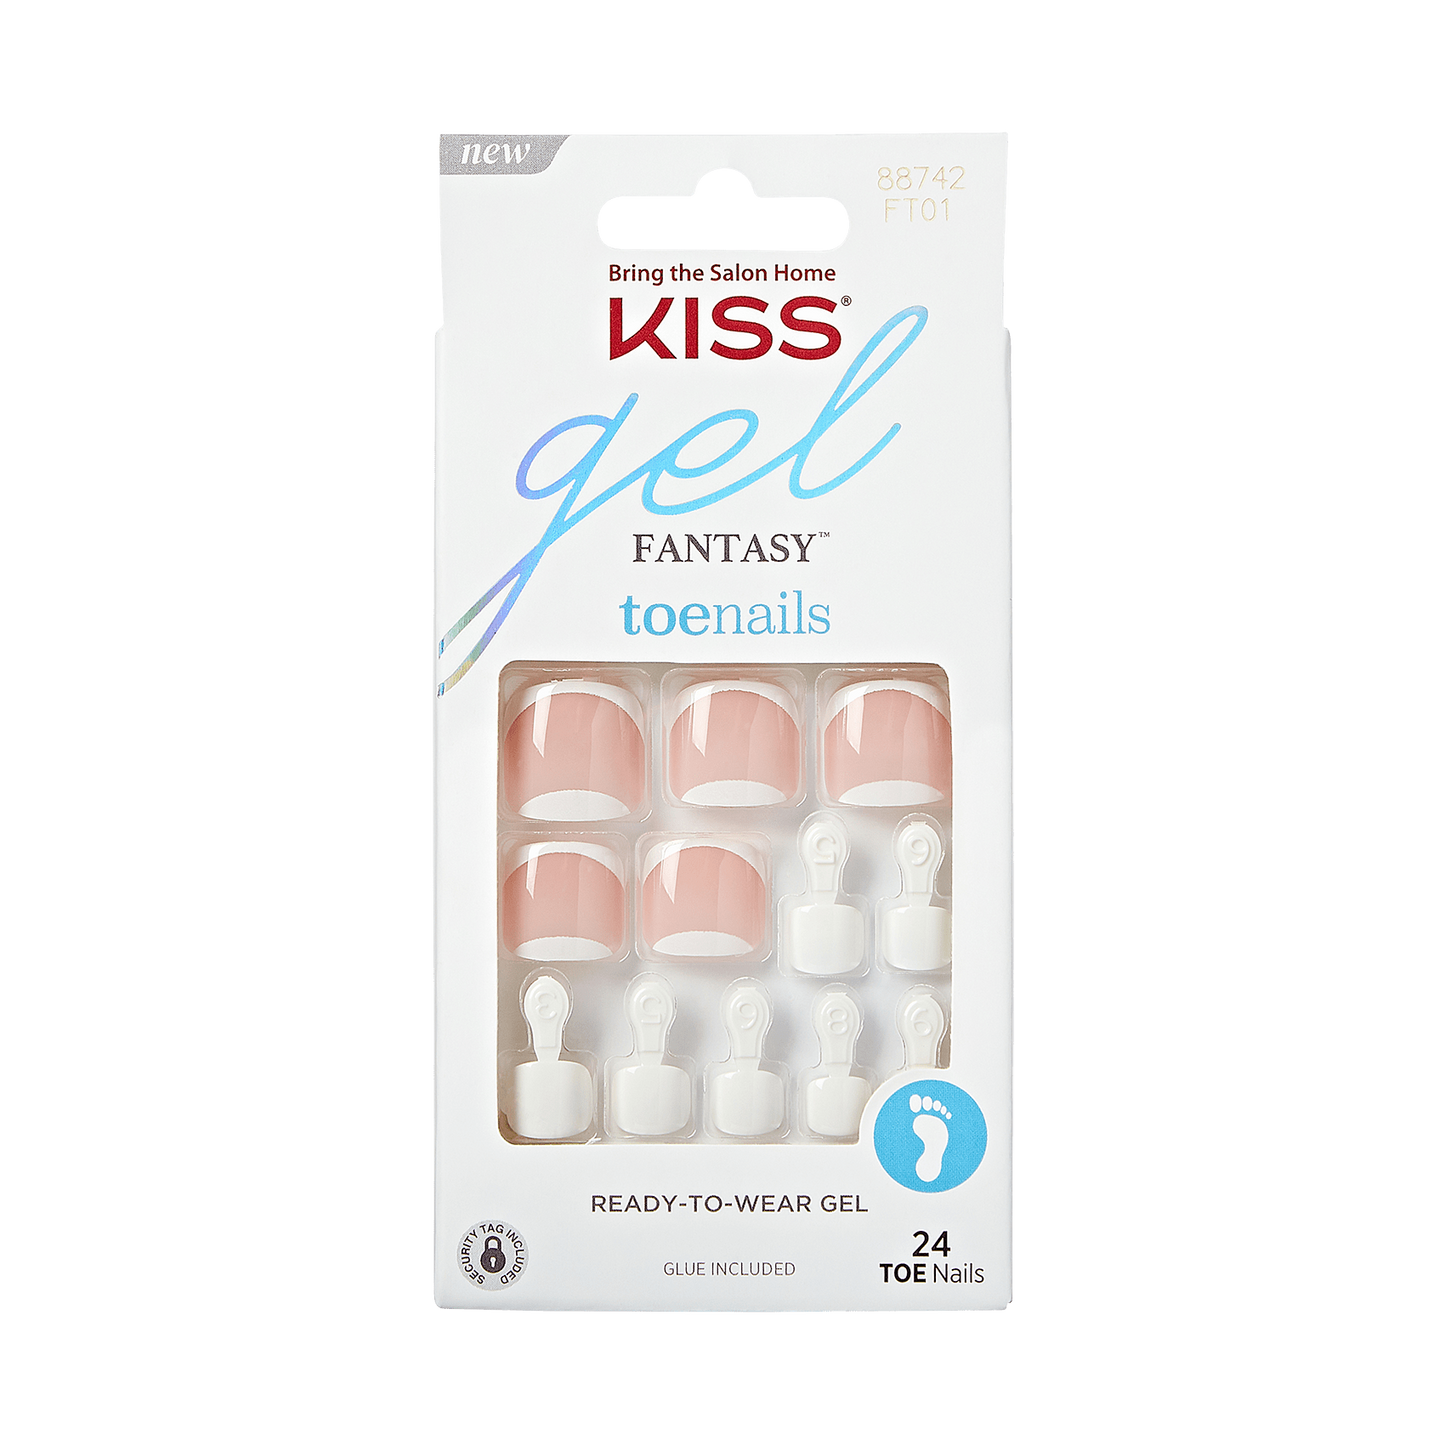 KISS Gel Fantasy Toenails